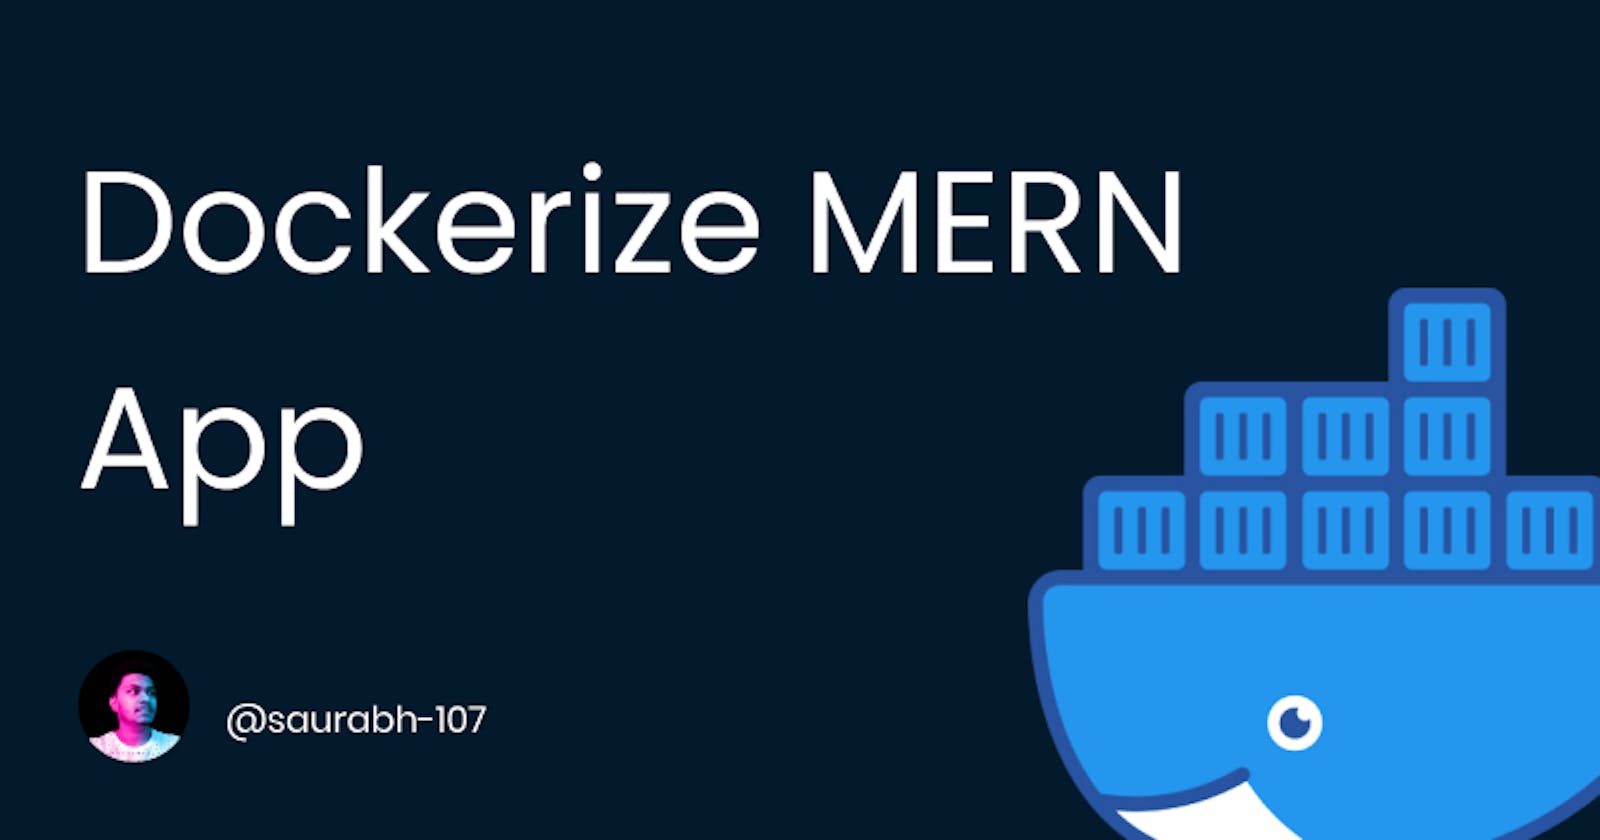 Dockerize your MERN + Flask app